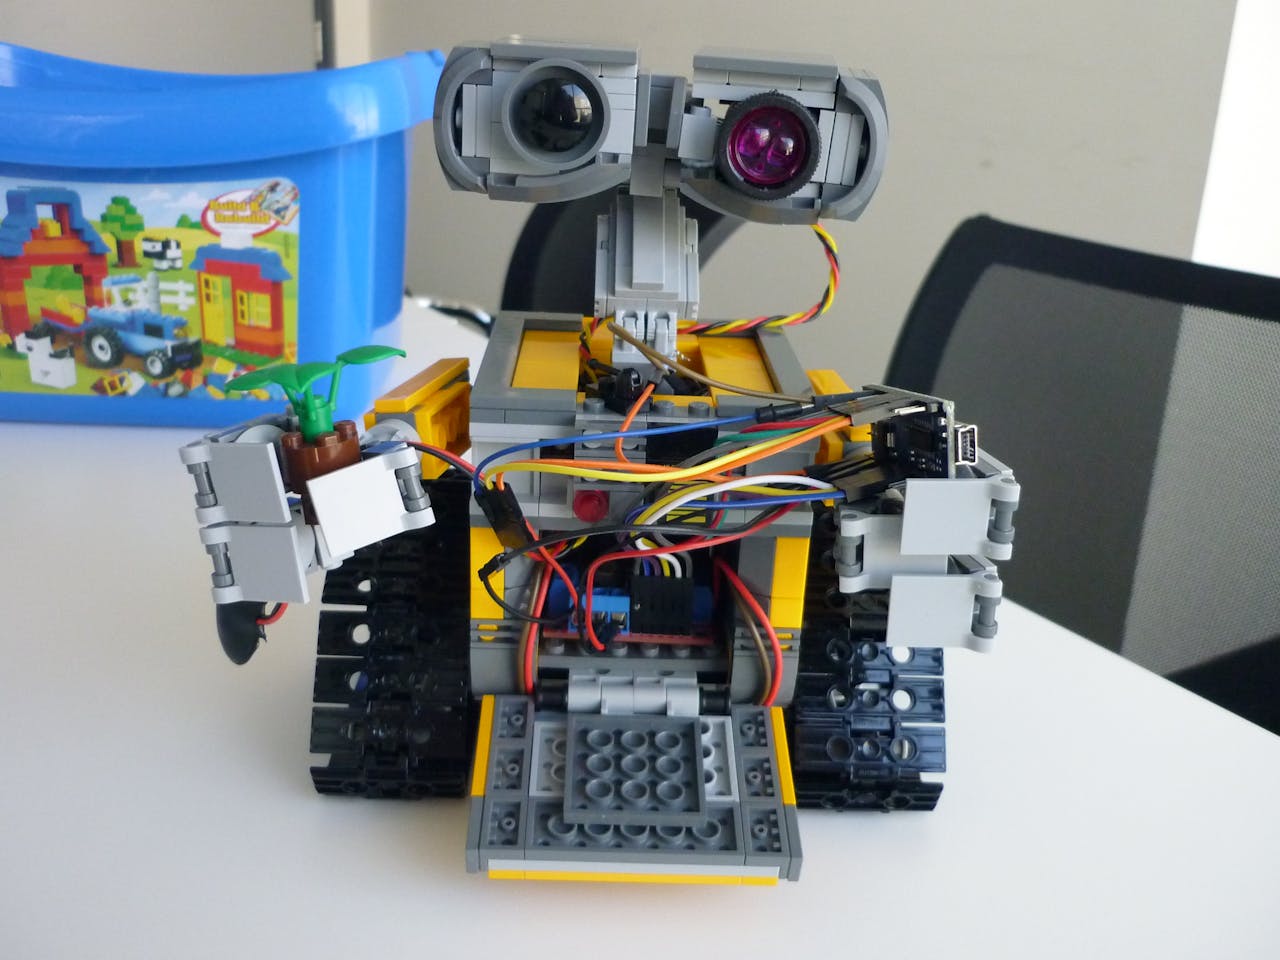 Lego Wall E With Arduino Arduino Project Hub